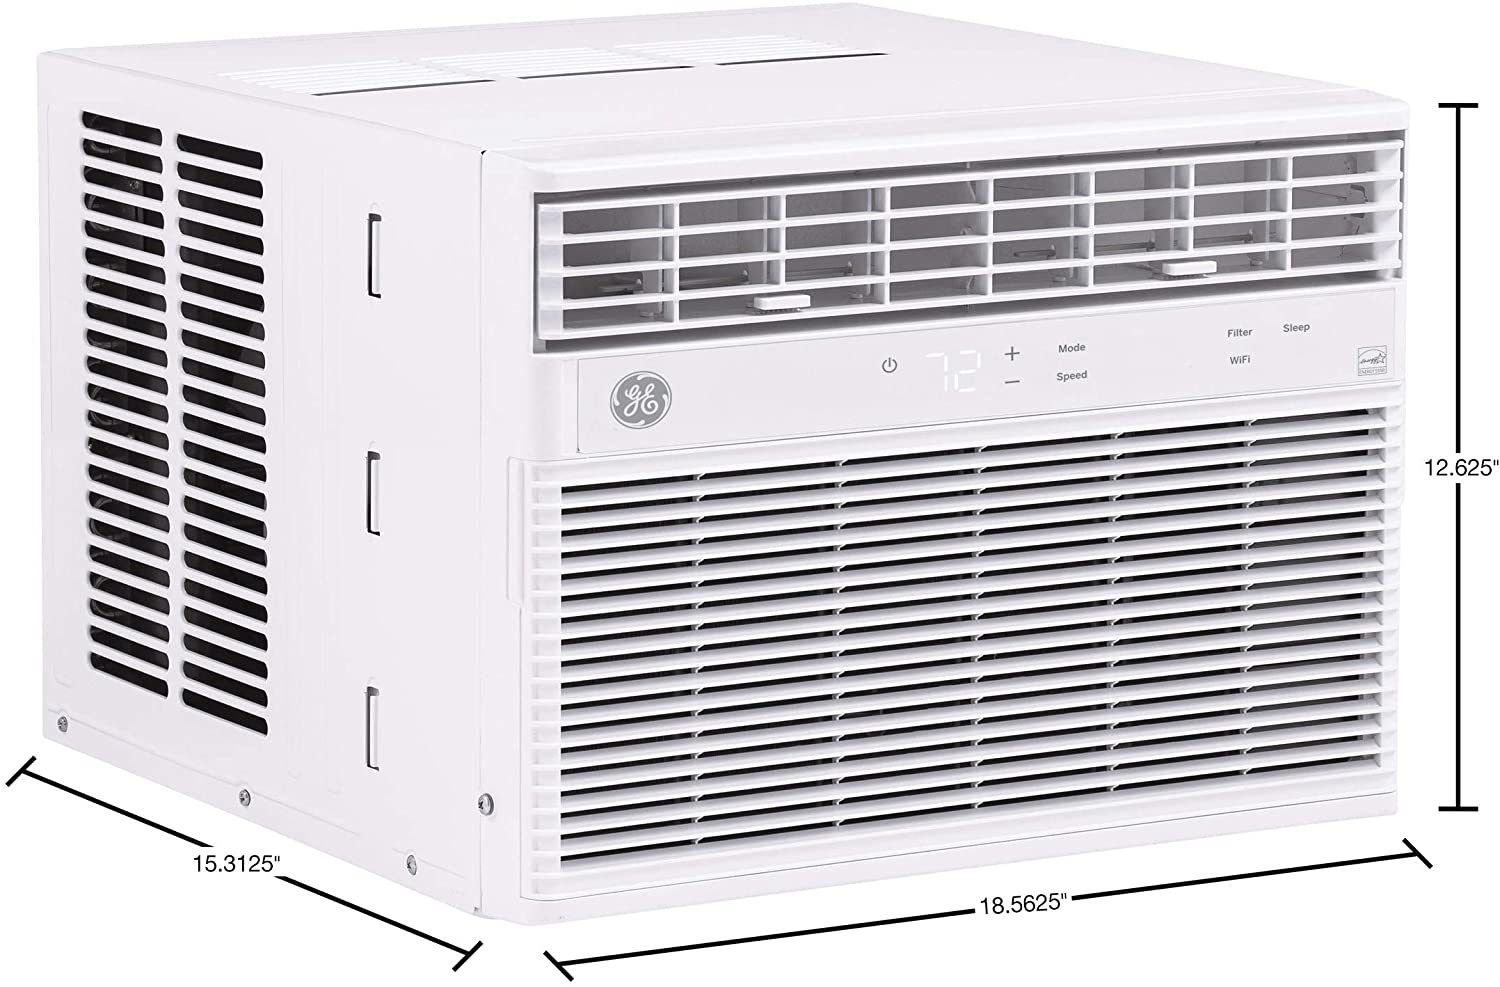 GE 8,000 BTU Smart Window Air Conditioner Specs